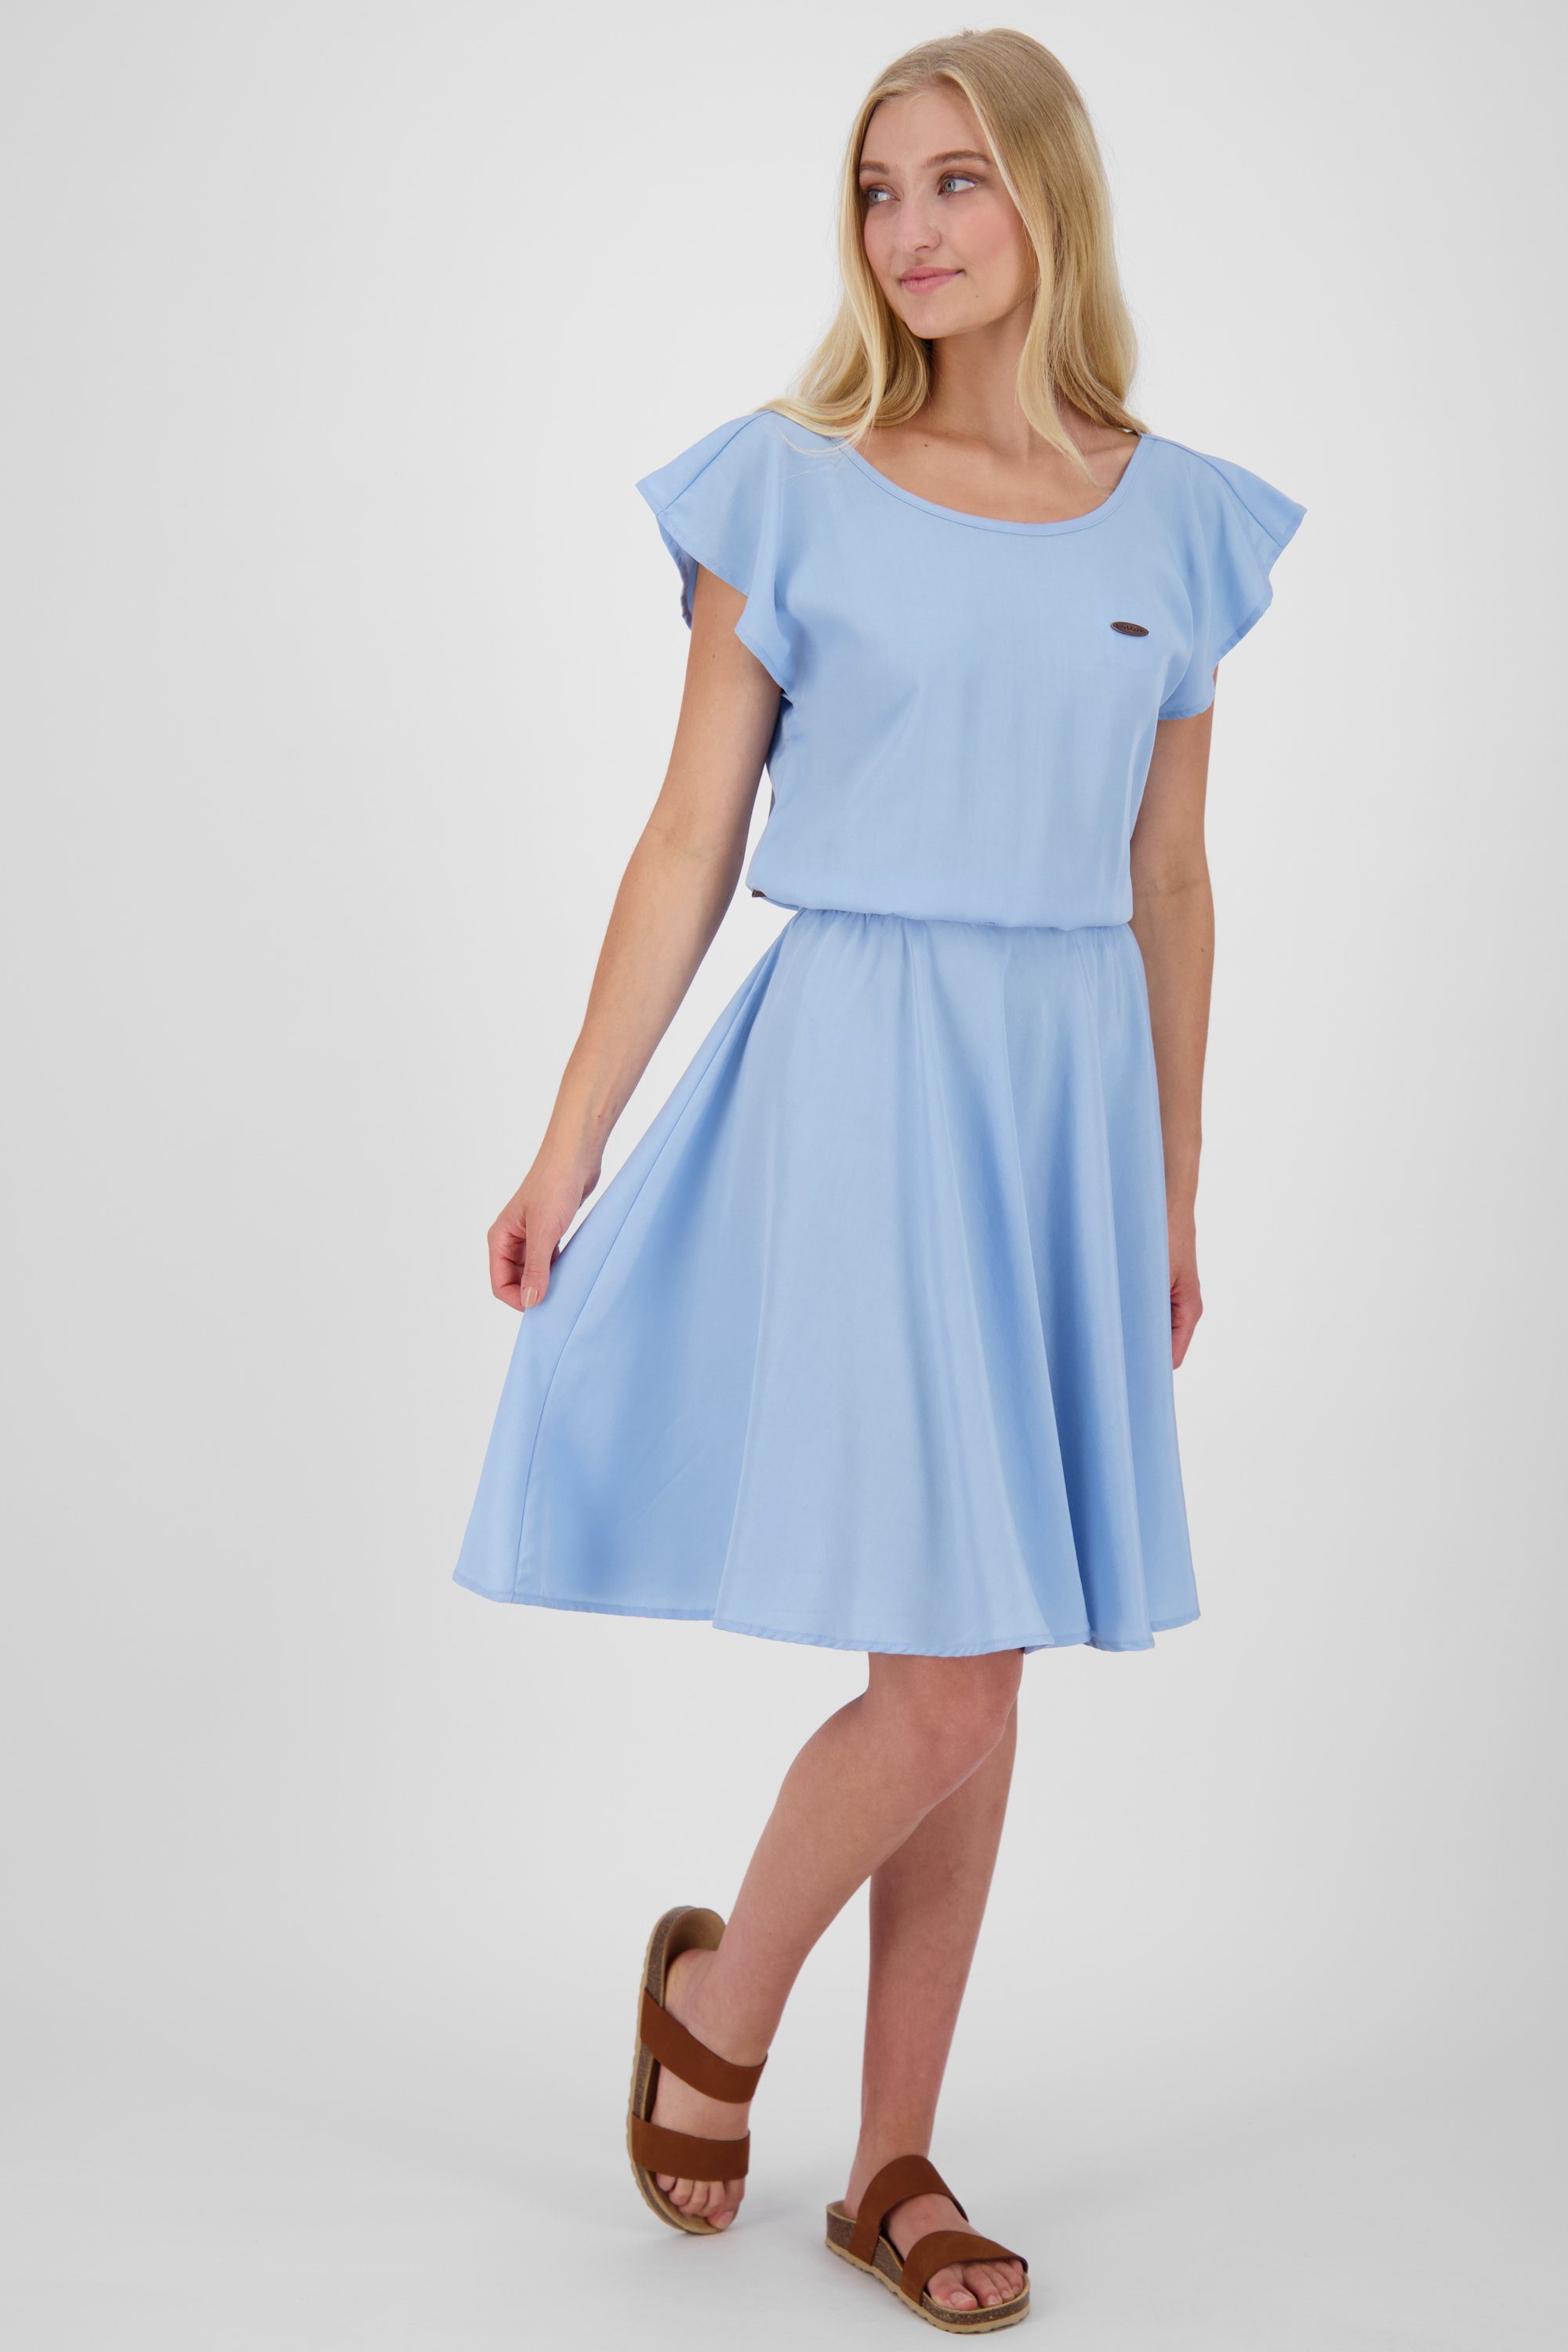 Alife & Kickin Sommerkleid, frozen Dress Damen Jerseykleid Kleid IsabellaAK